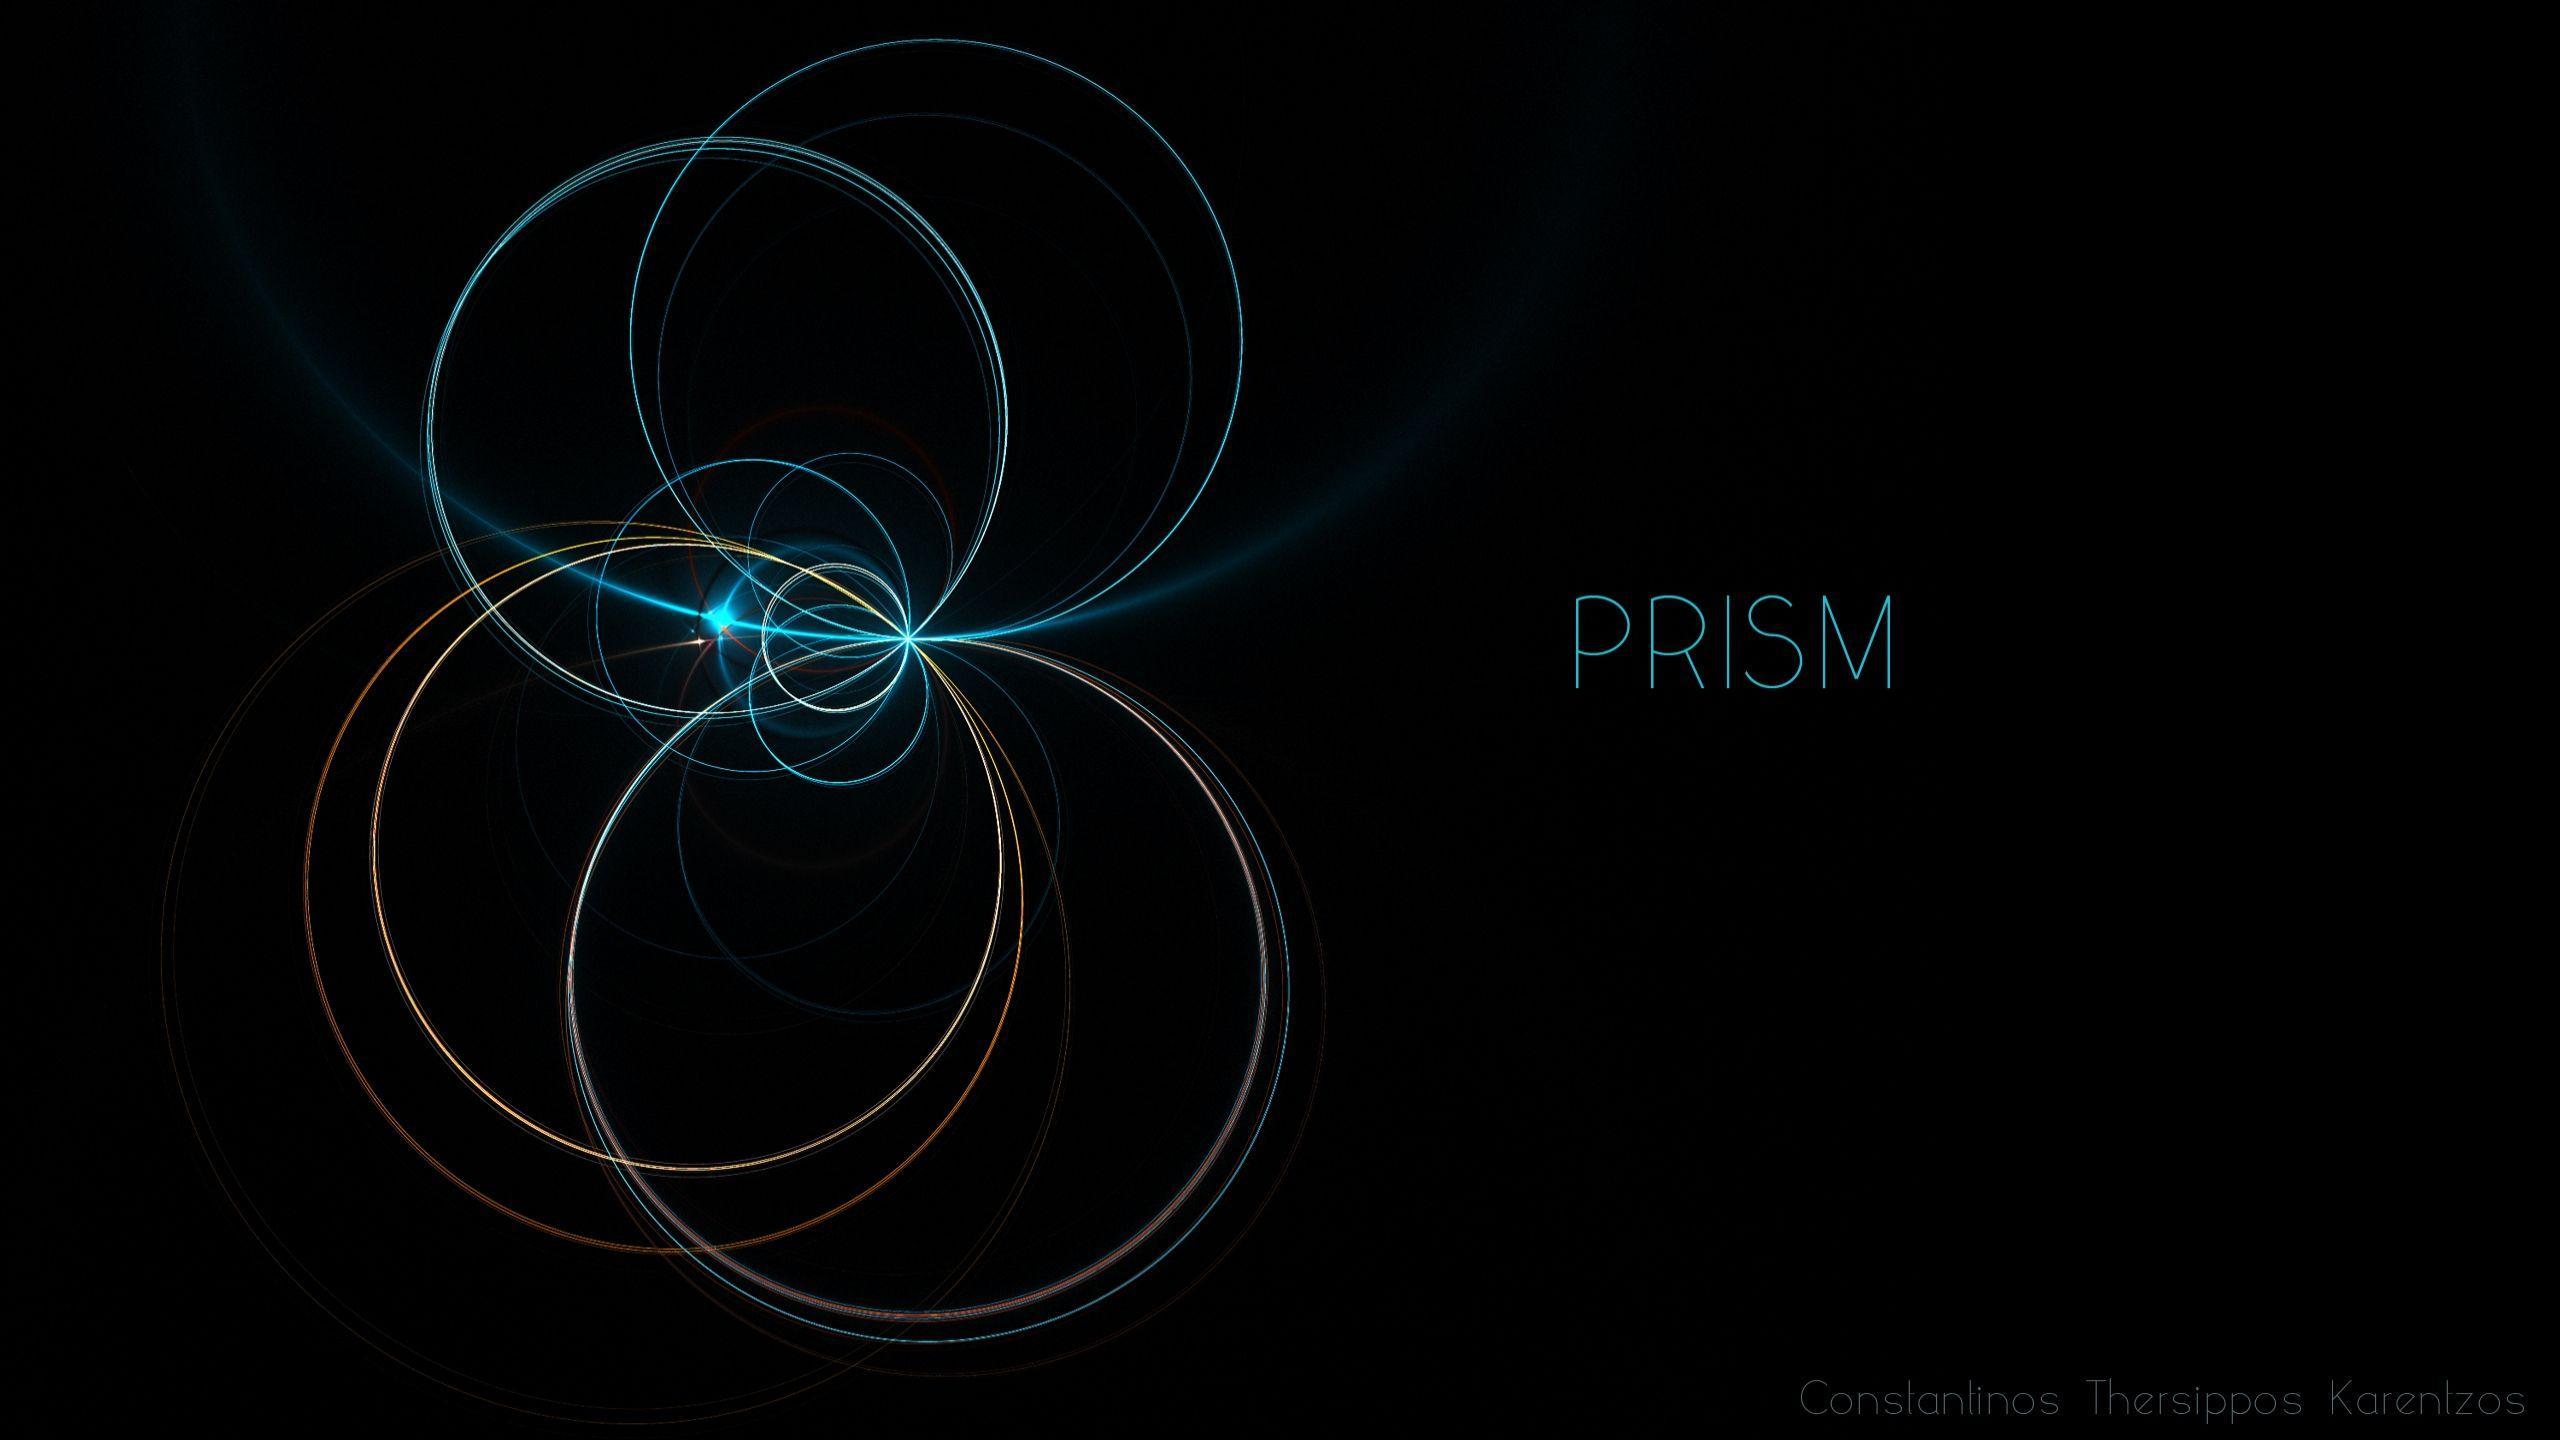 Prism wallpaper. Prism